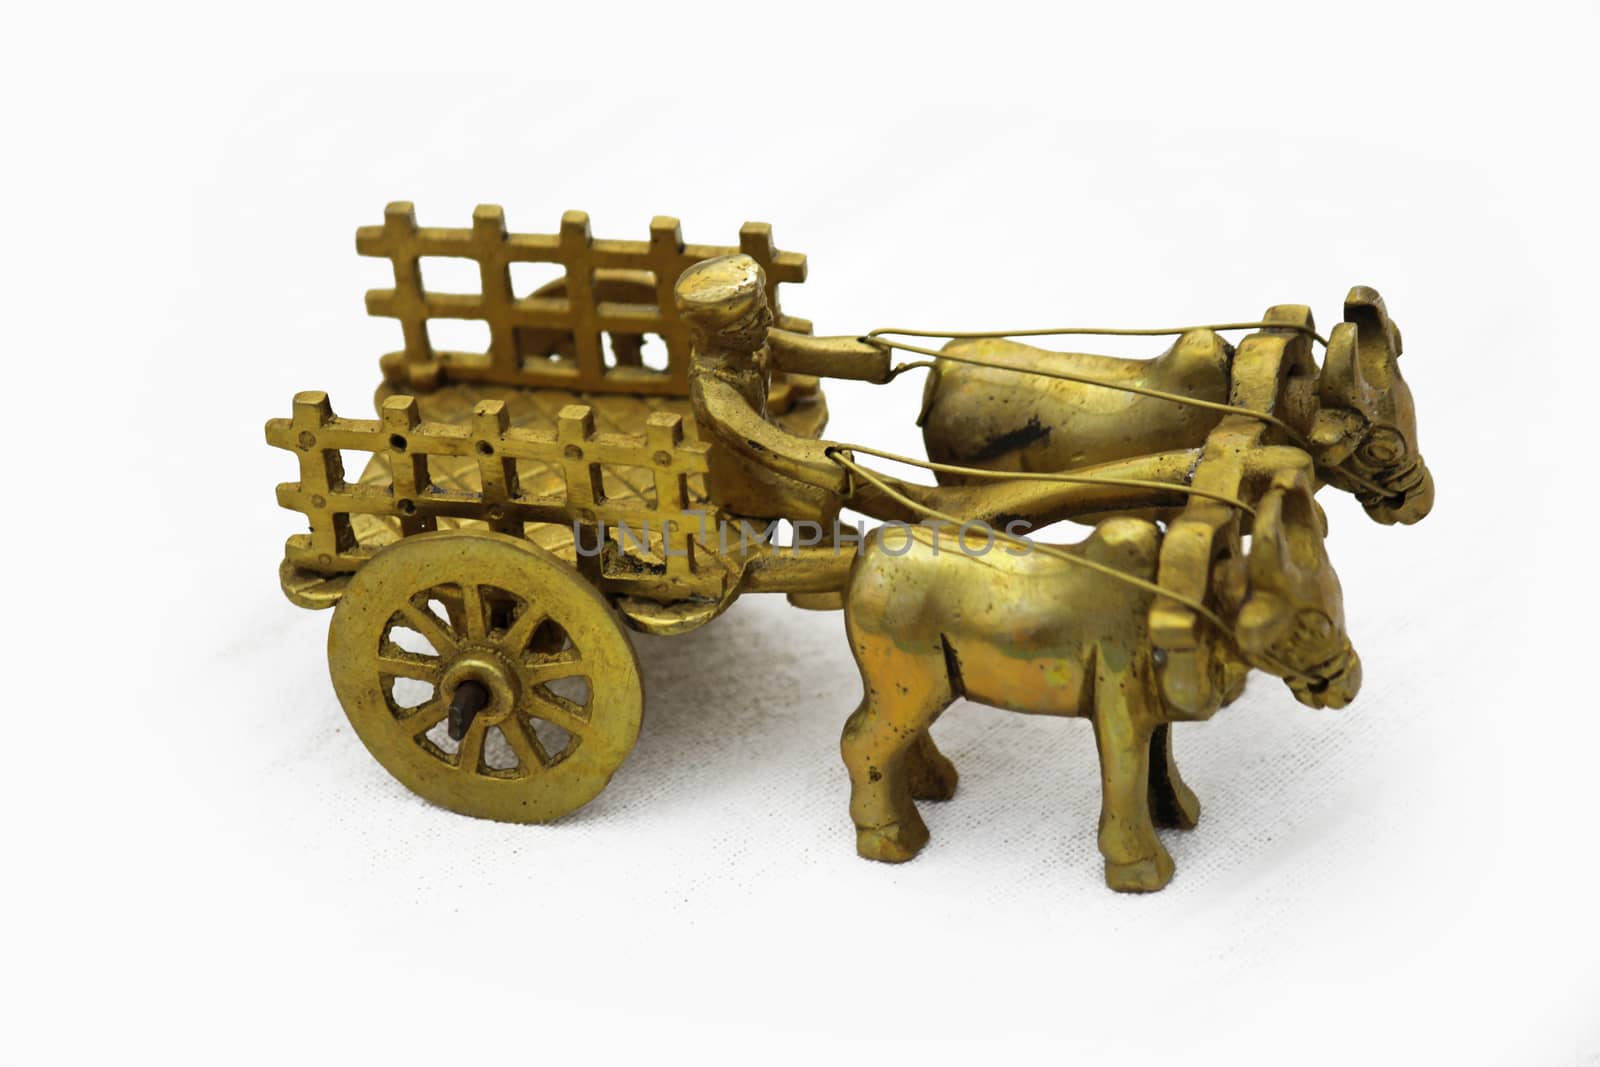 Antique Finish Brass Bullock Cart Sculpture by yands